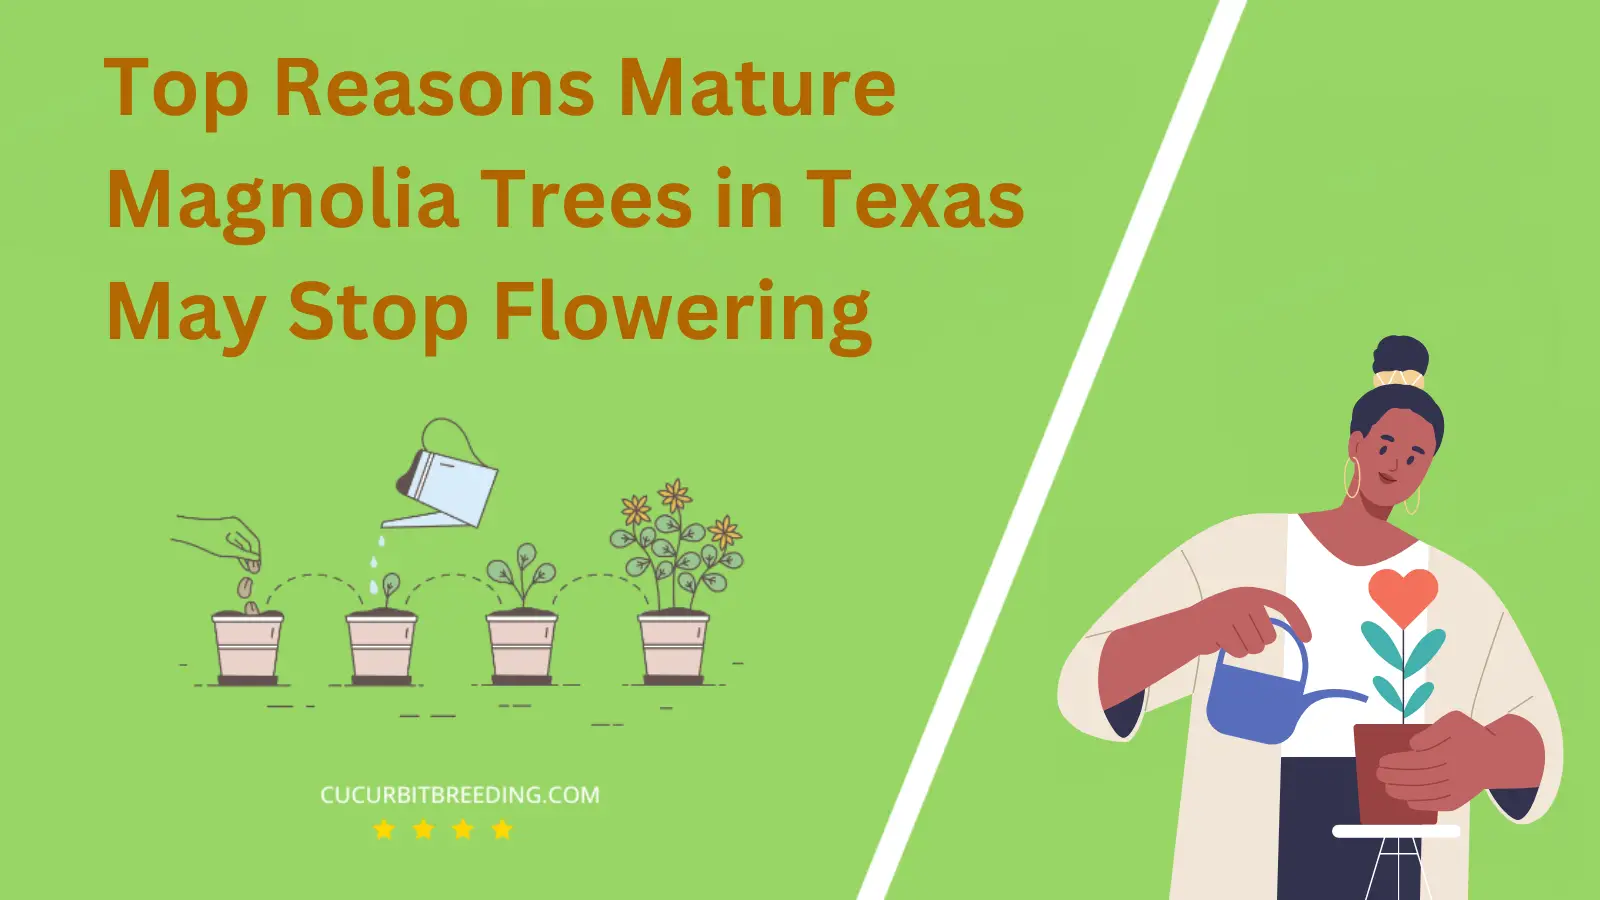 Top Reasons Mature Magnolia Trees in Texas May Stop Flowering